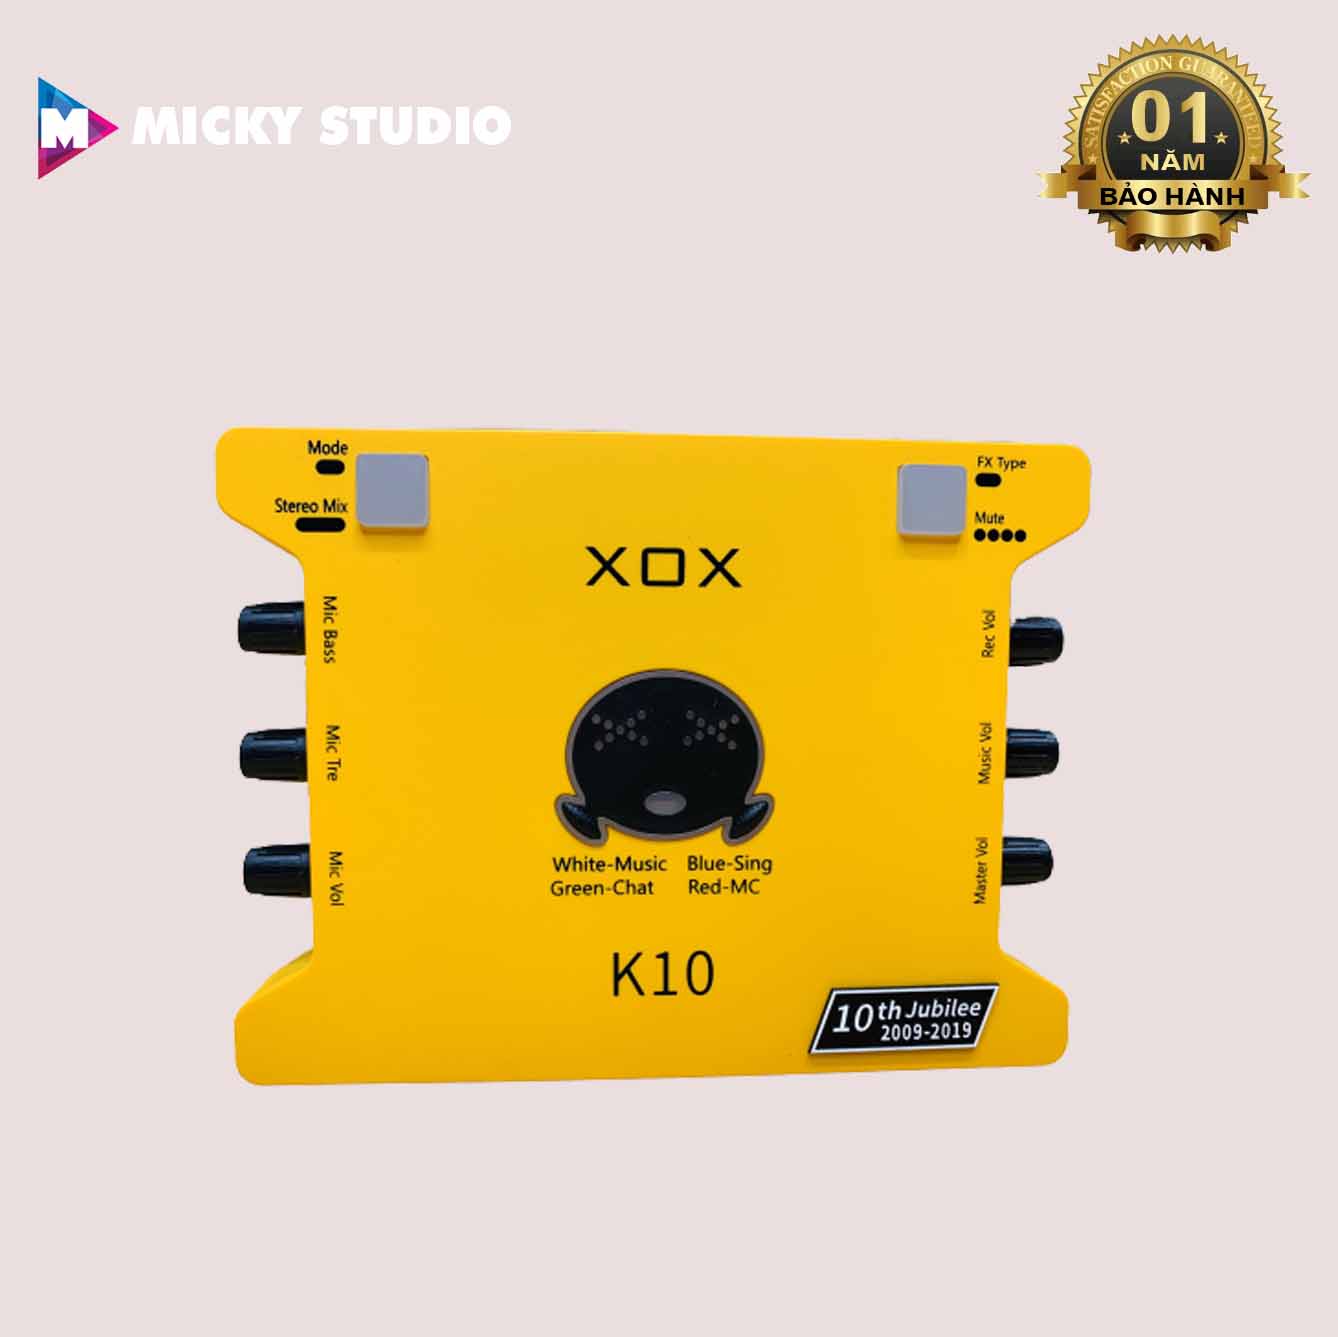 sound-card-live-tream-k300-micky-studio-vi-t-nam-h-th-ng-b-n-l